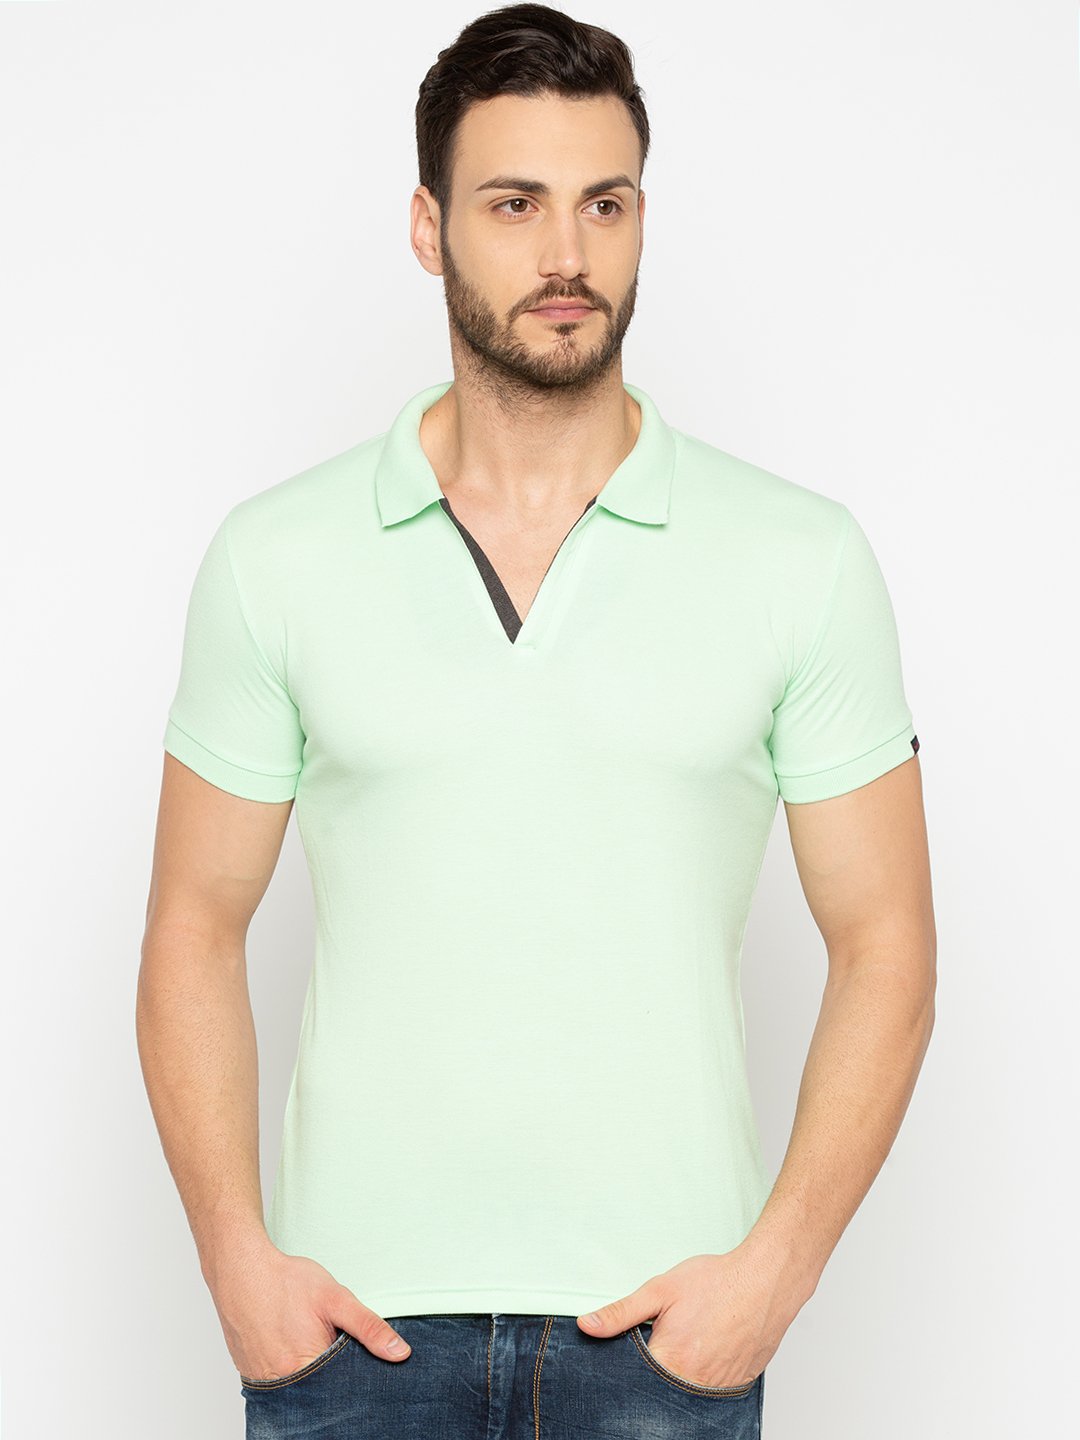 Ice Green polo t shirt